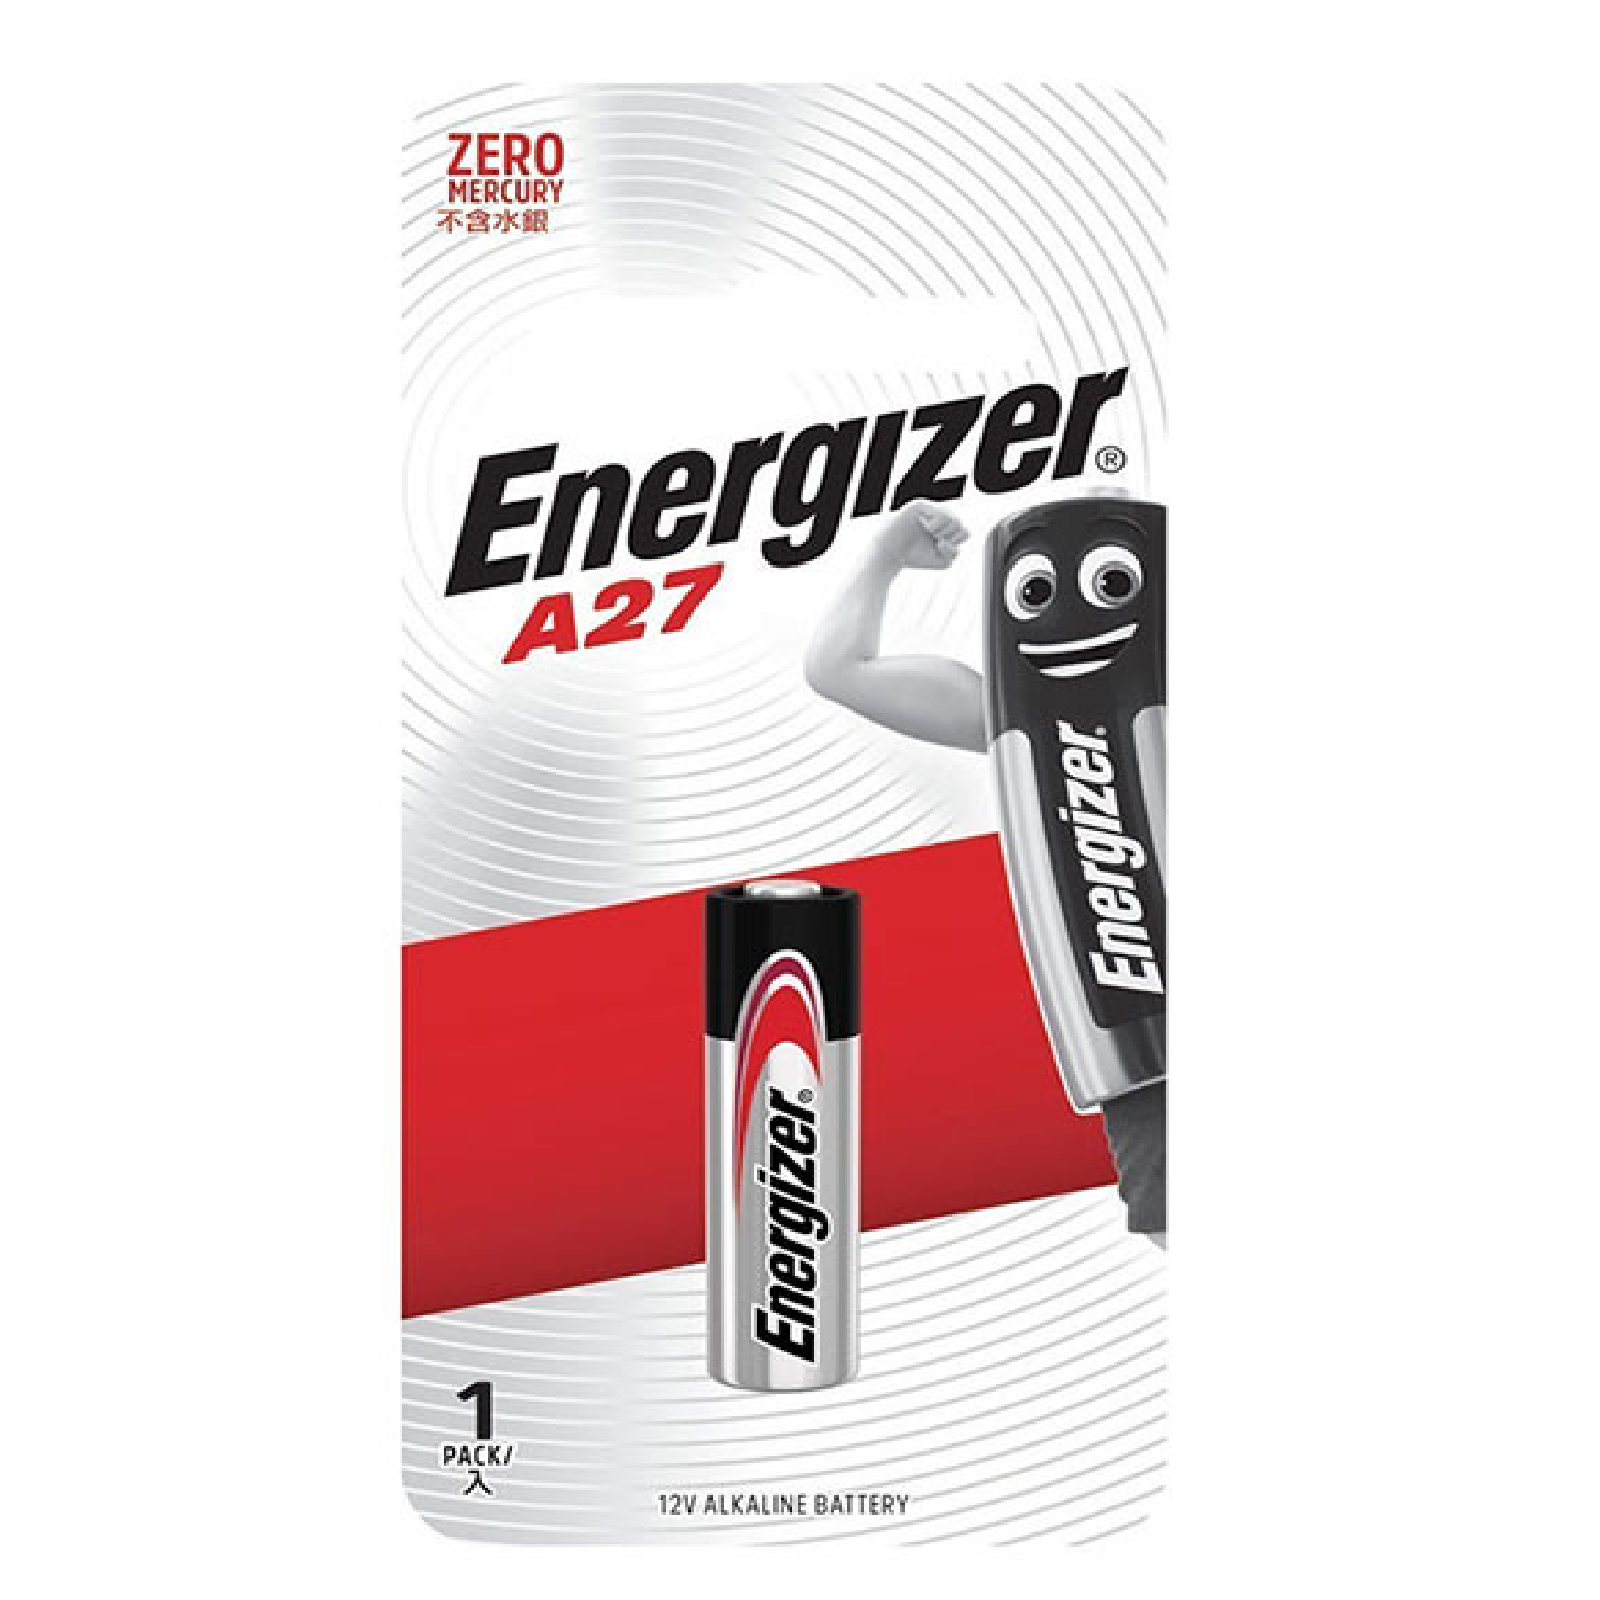 Energizer A27 Miniature Alkaline Battery 12V